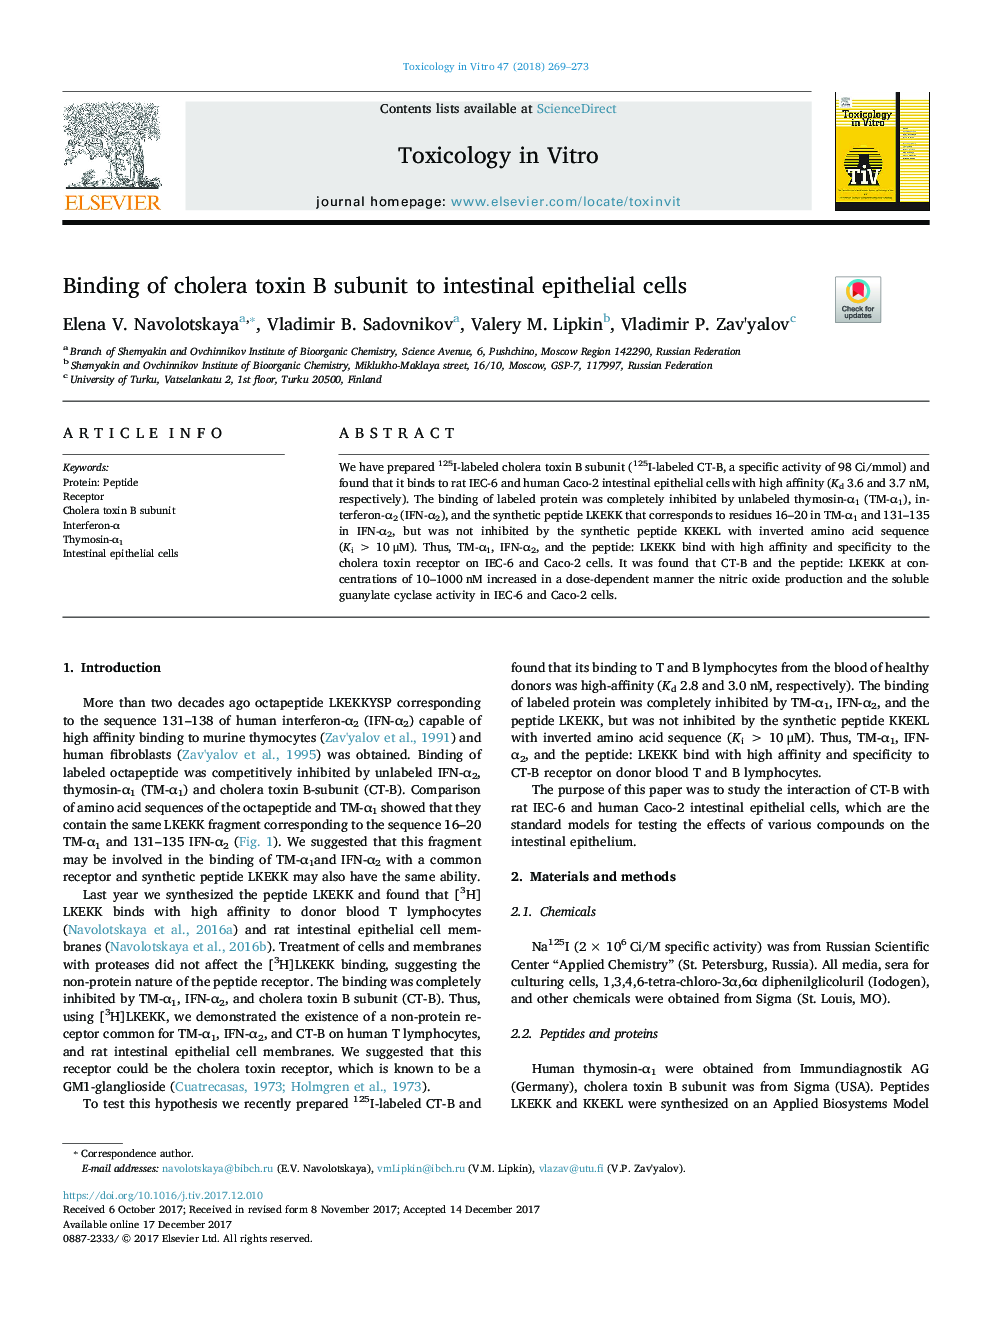 Binding of cholera toxin B subunit to intestinal epithelial cells